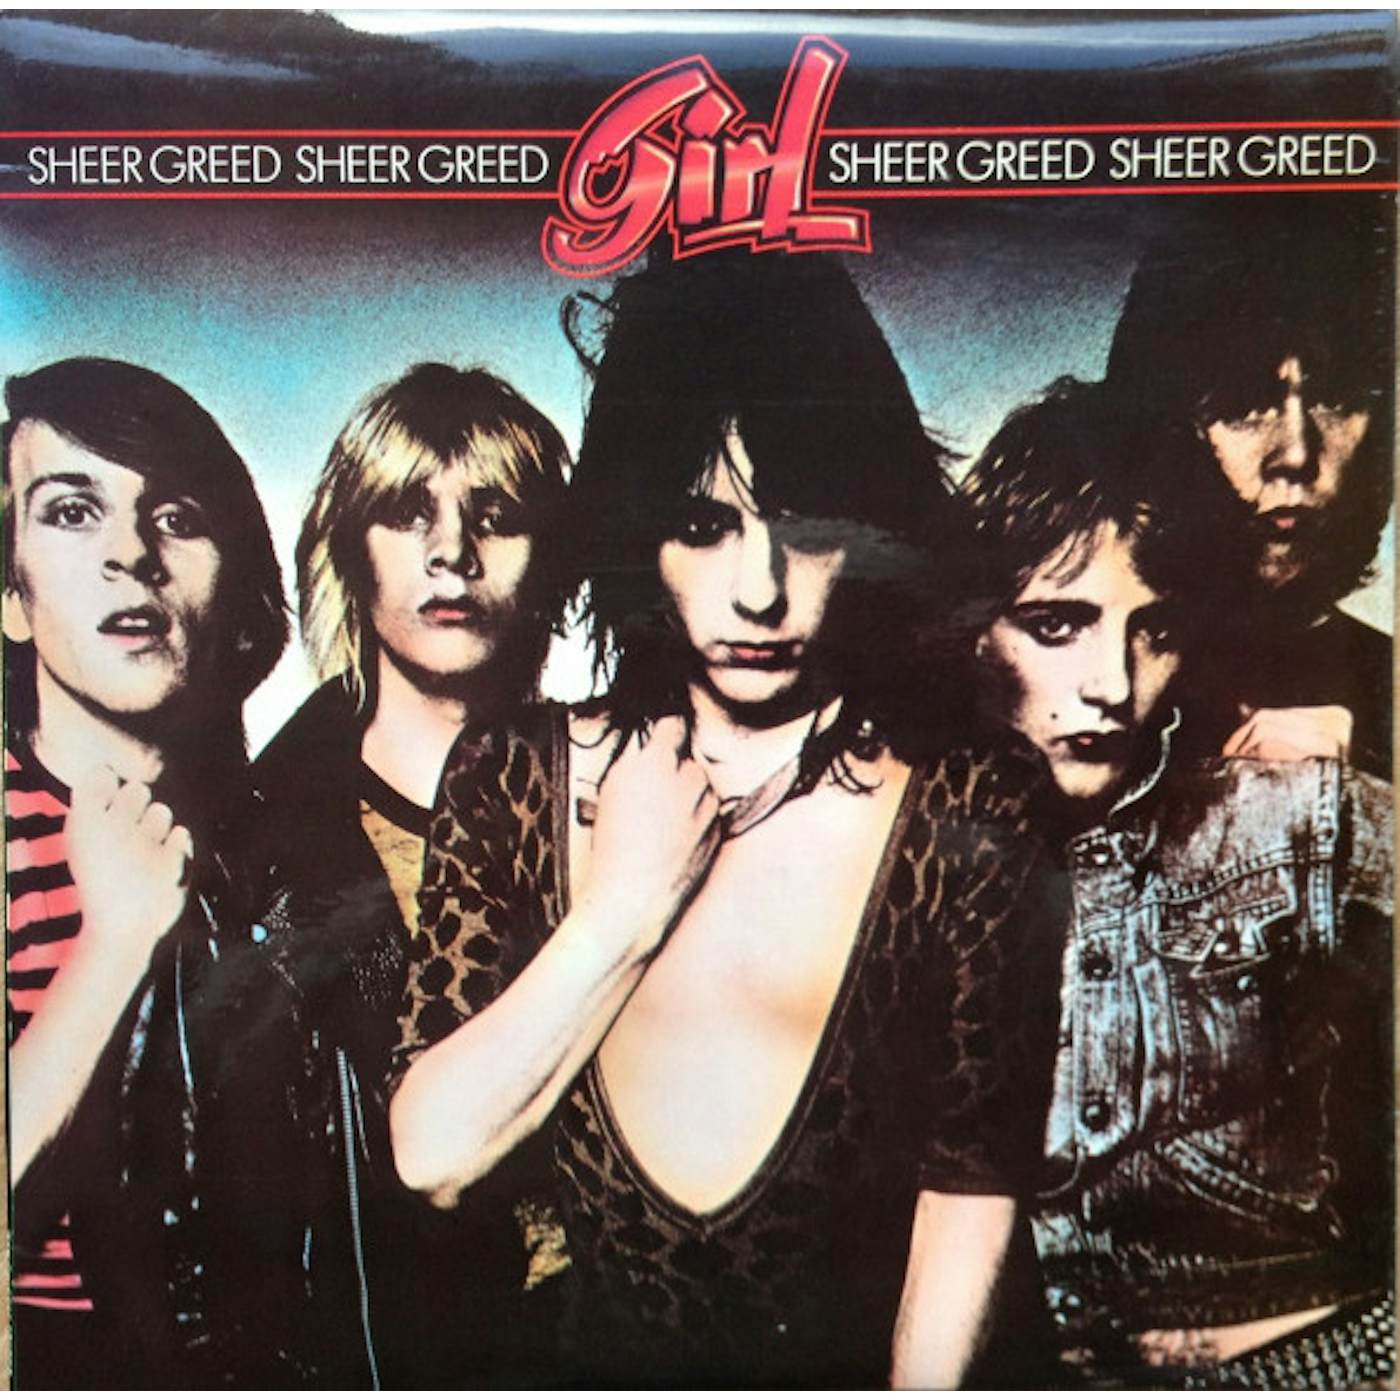 Girl Sheer Greed Vinyl Record